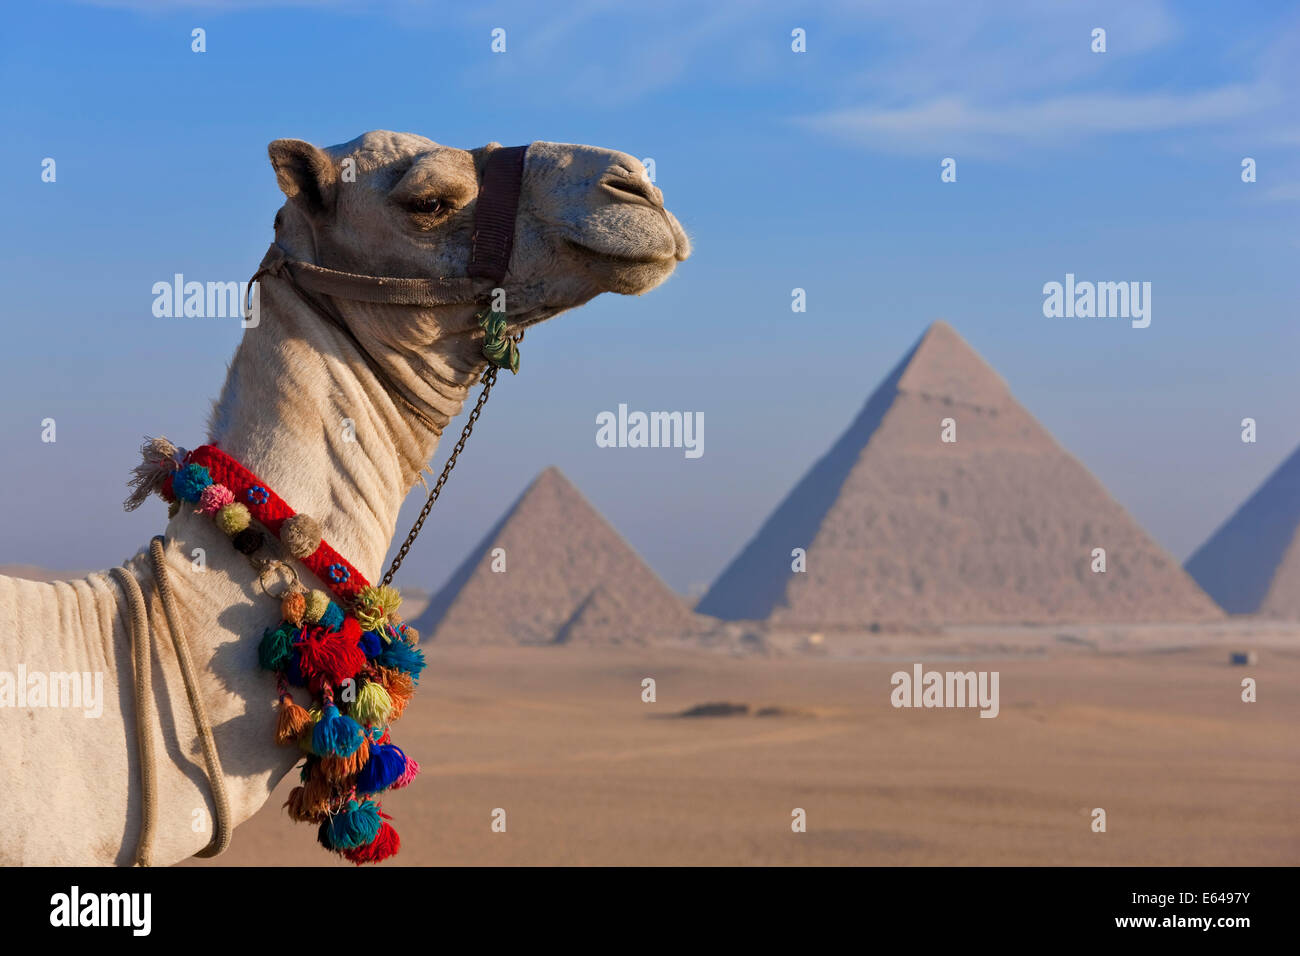 Kamele & Pyramiden, Gizeh, Ägypten Stockfoto